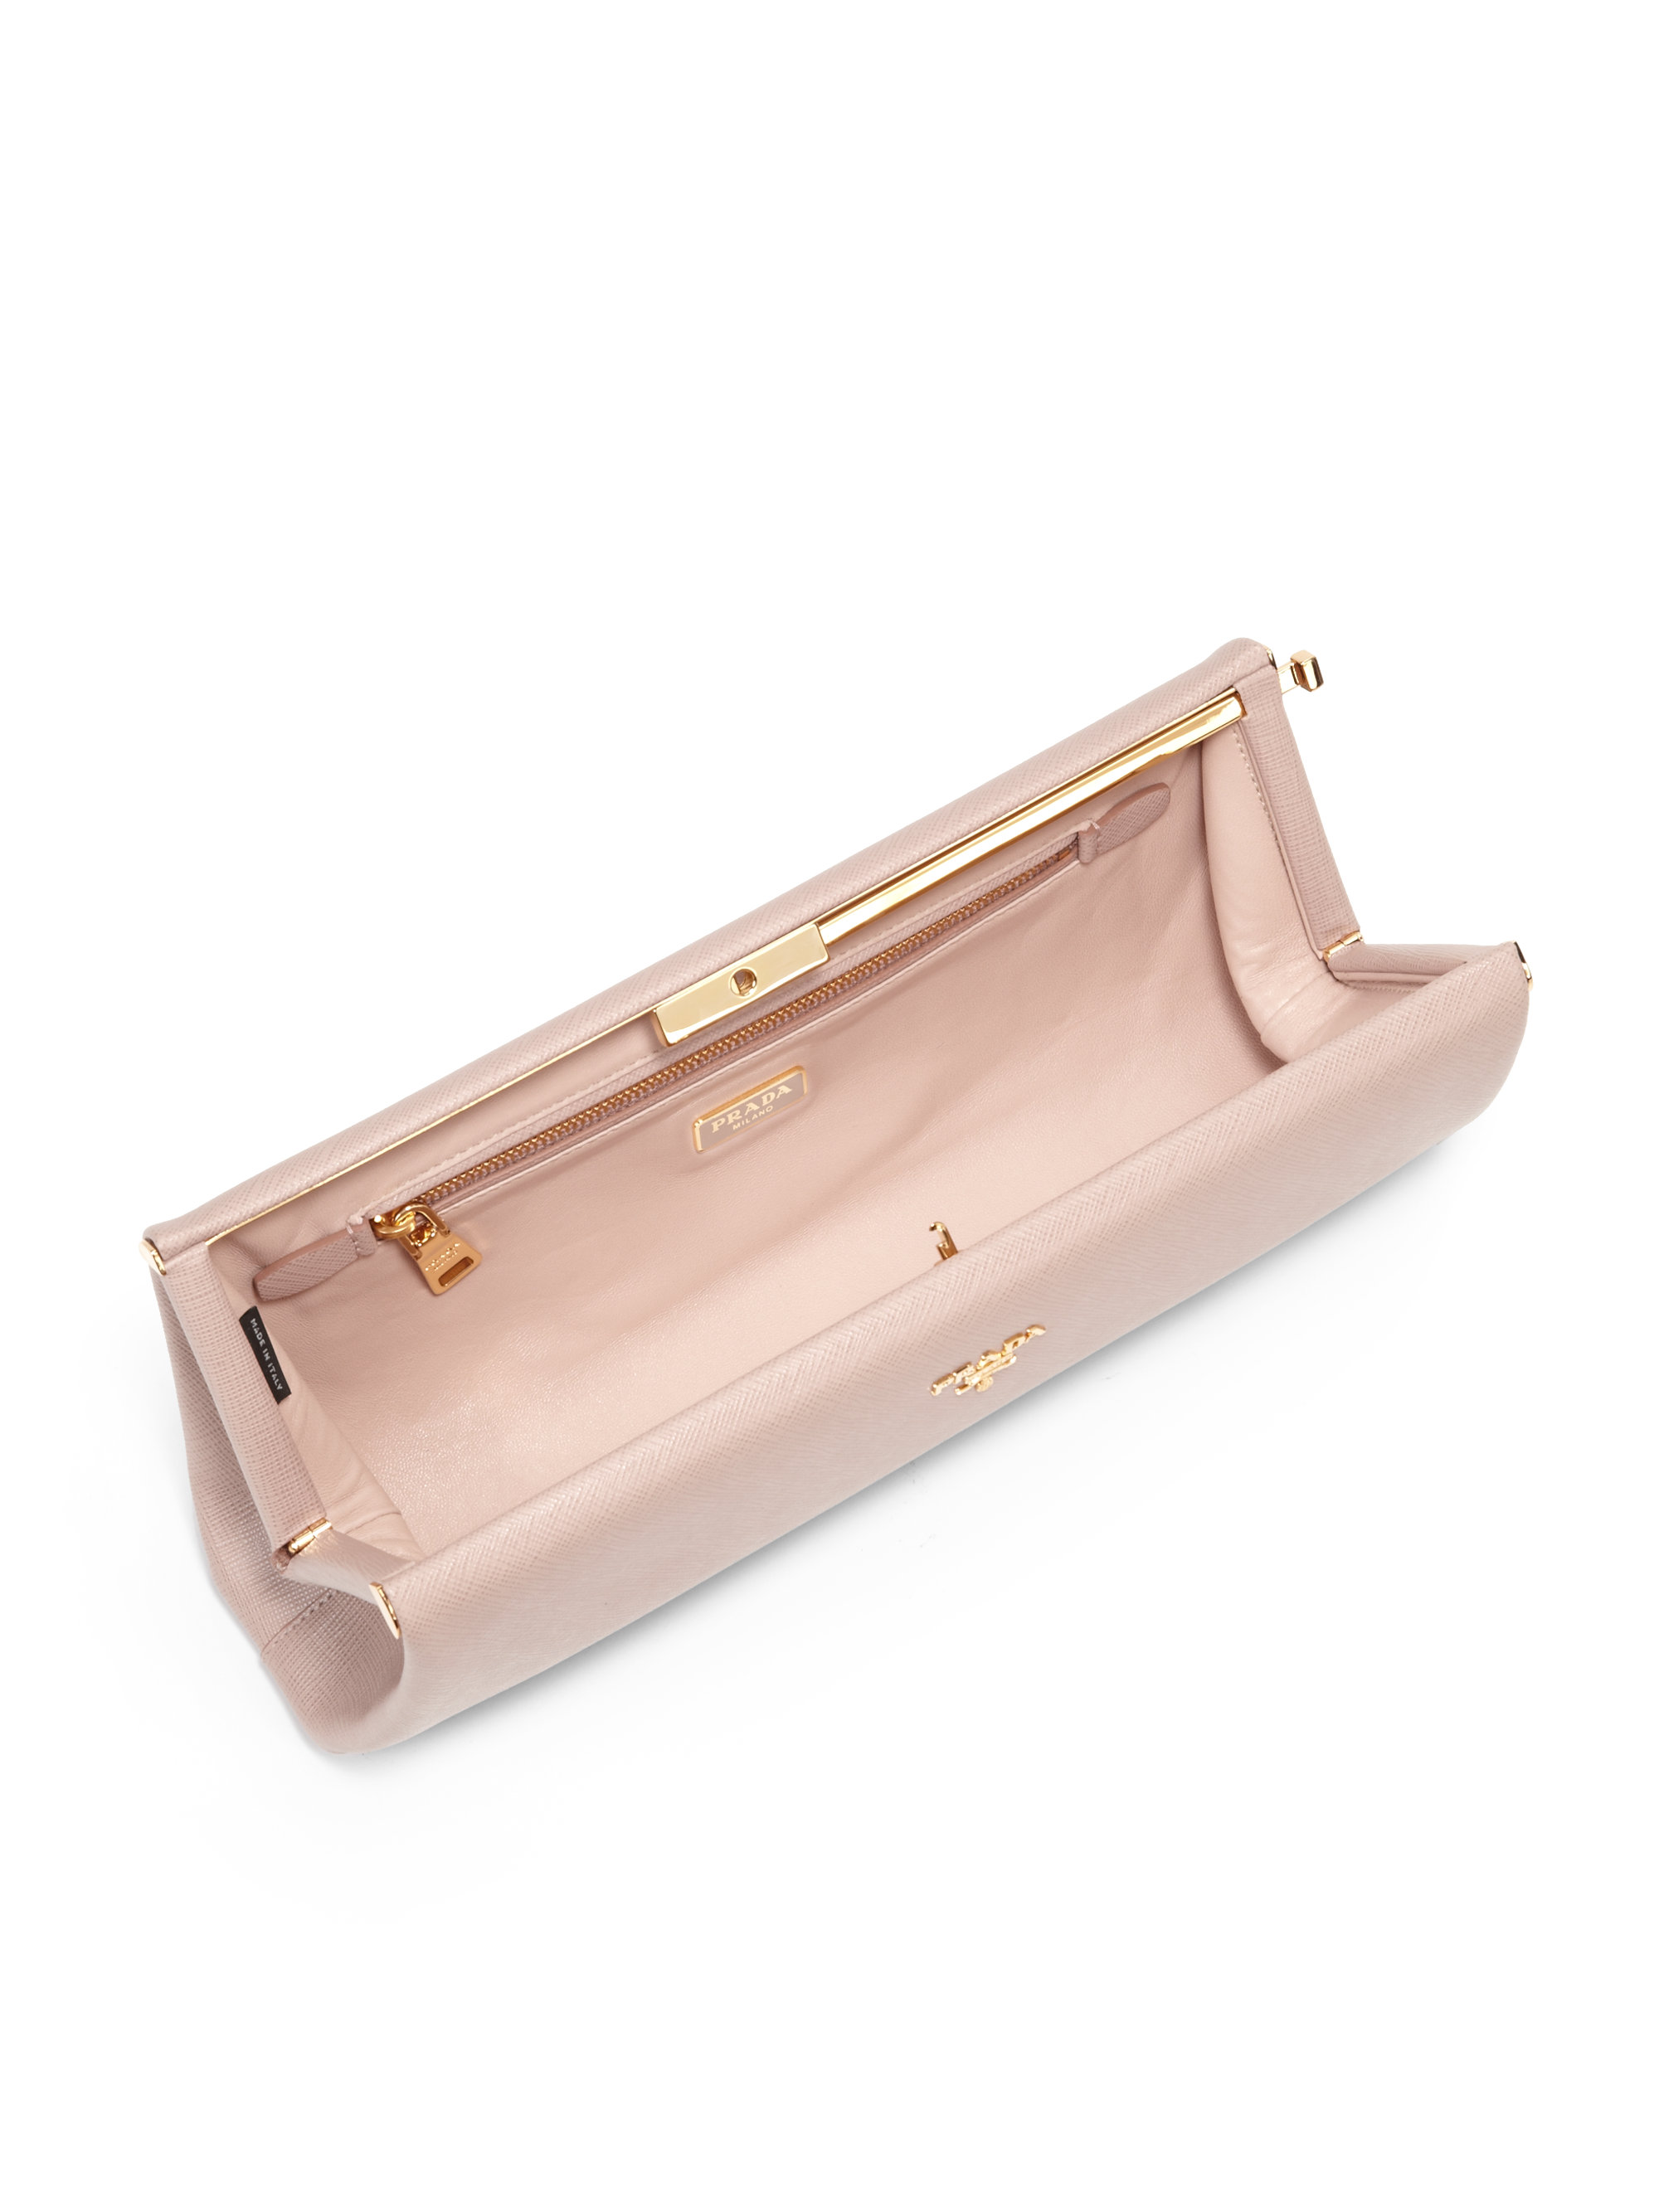 Prada Saffiano Leather Frame Clutch in Pink (CAMMEO-PINK) | Lyst  